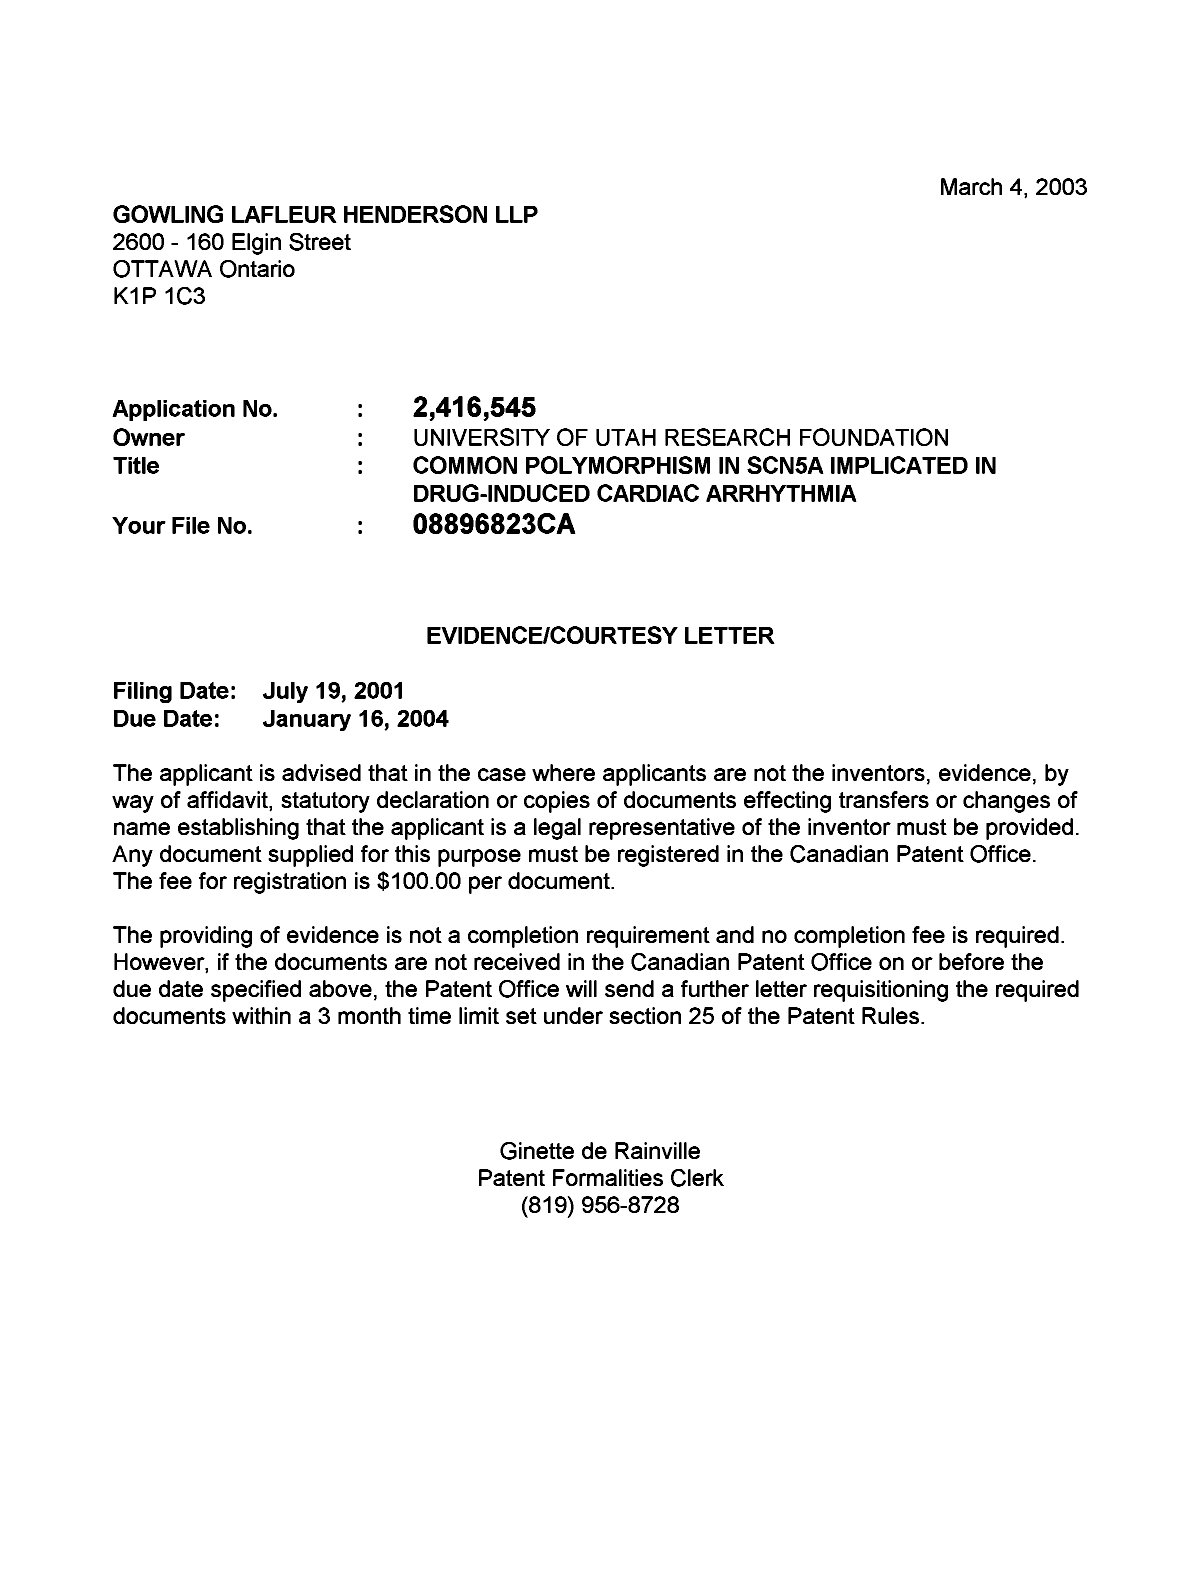 Canadian Patent Document 2416545. Correspondence 20021226. Image 1 of 1